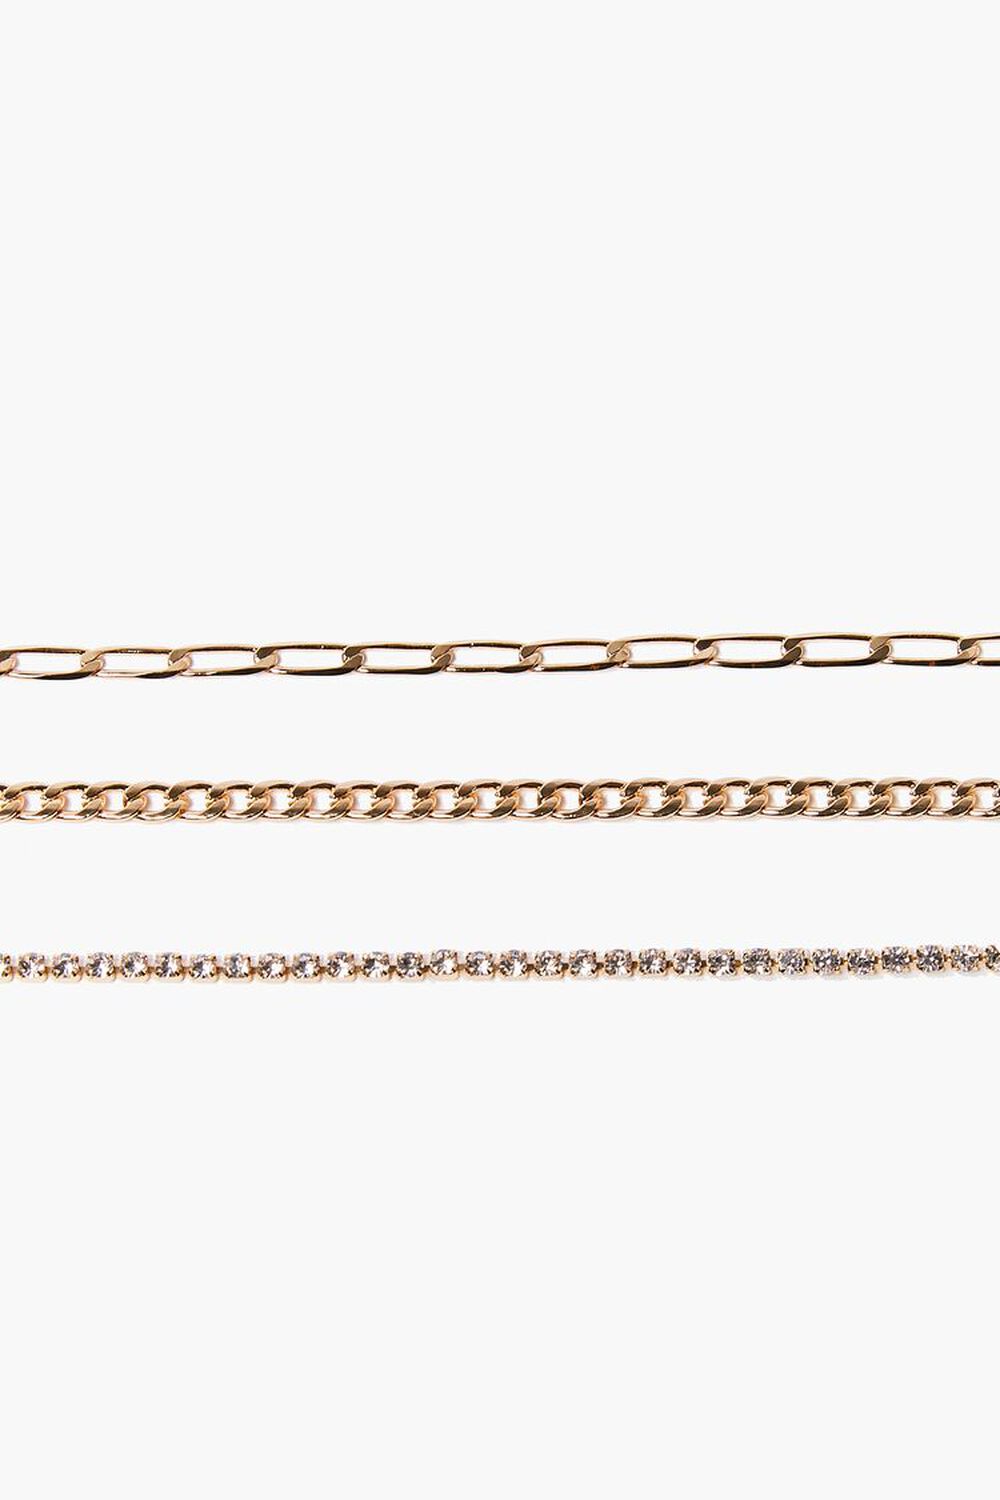 GOLD Chain Bracelet Set, image 1